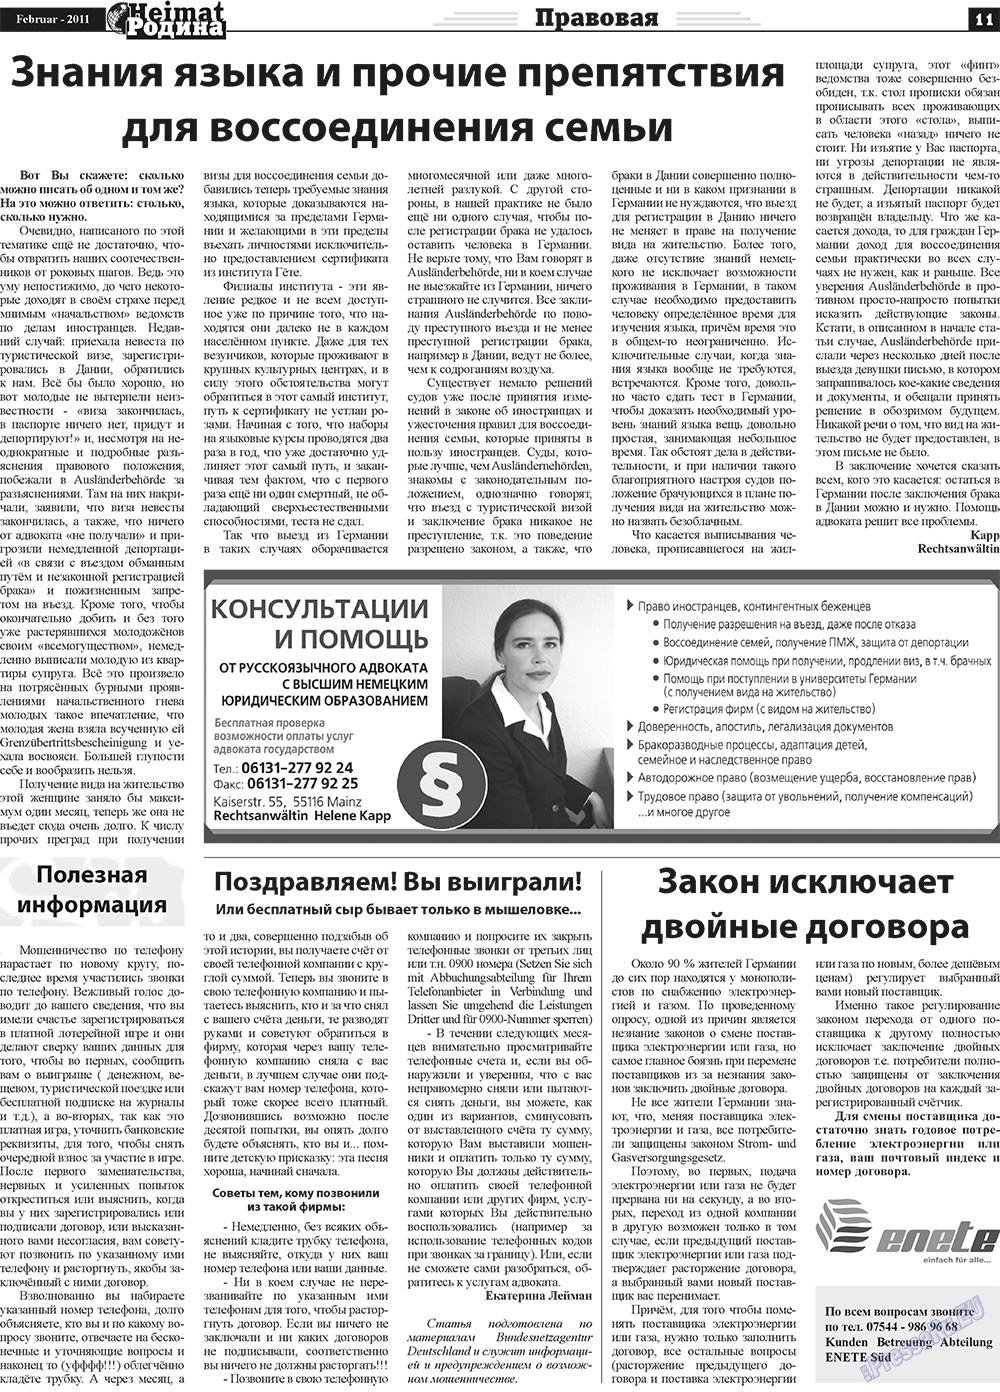 Heimat-Родина, газета. 2011 №2 стр.11